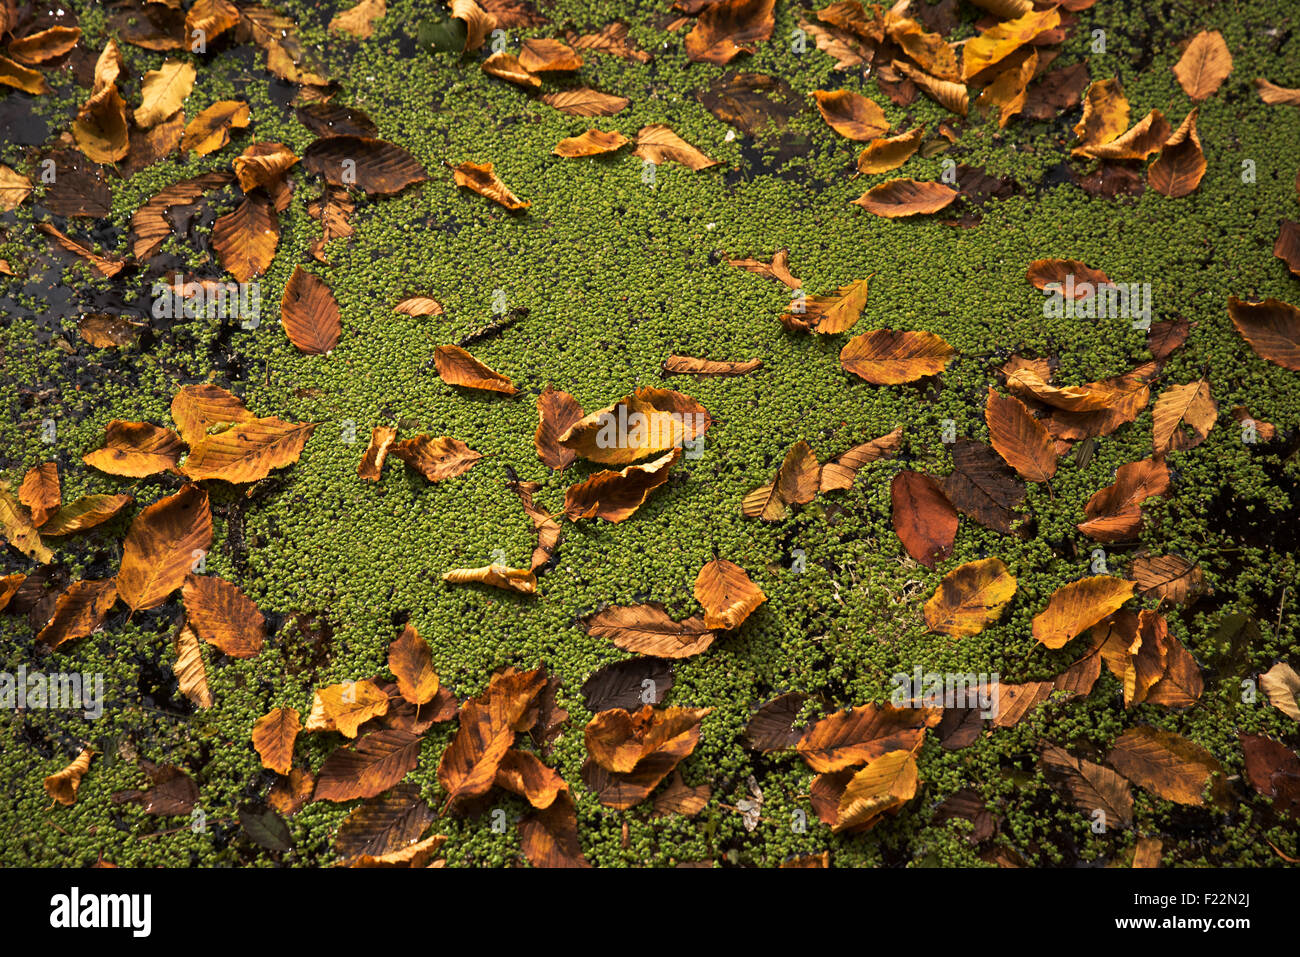 Autumn Leaves on The Duckweeds Stock Photo